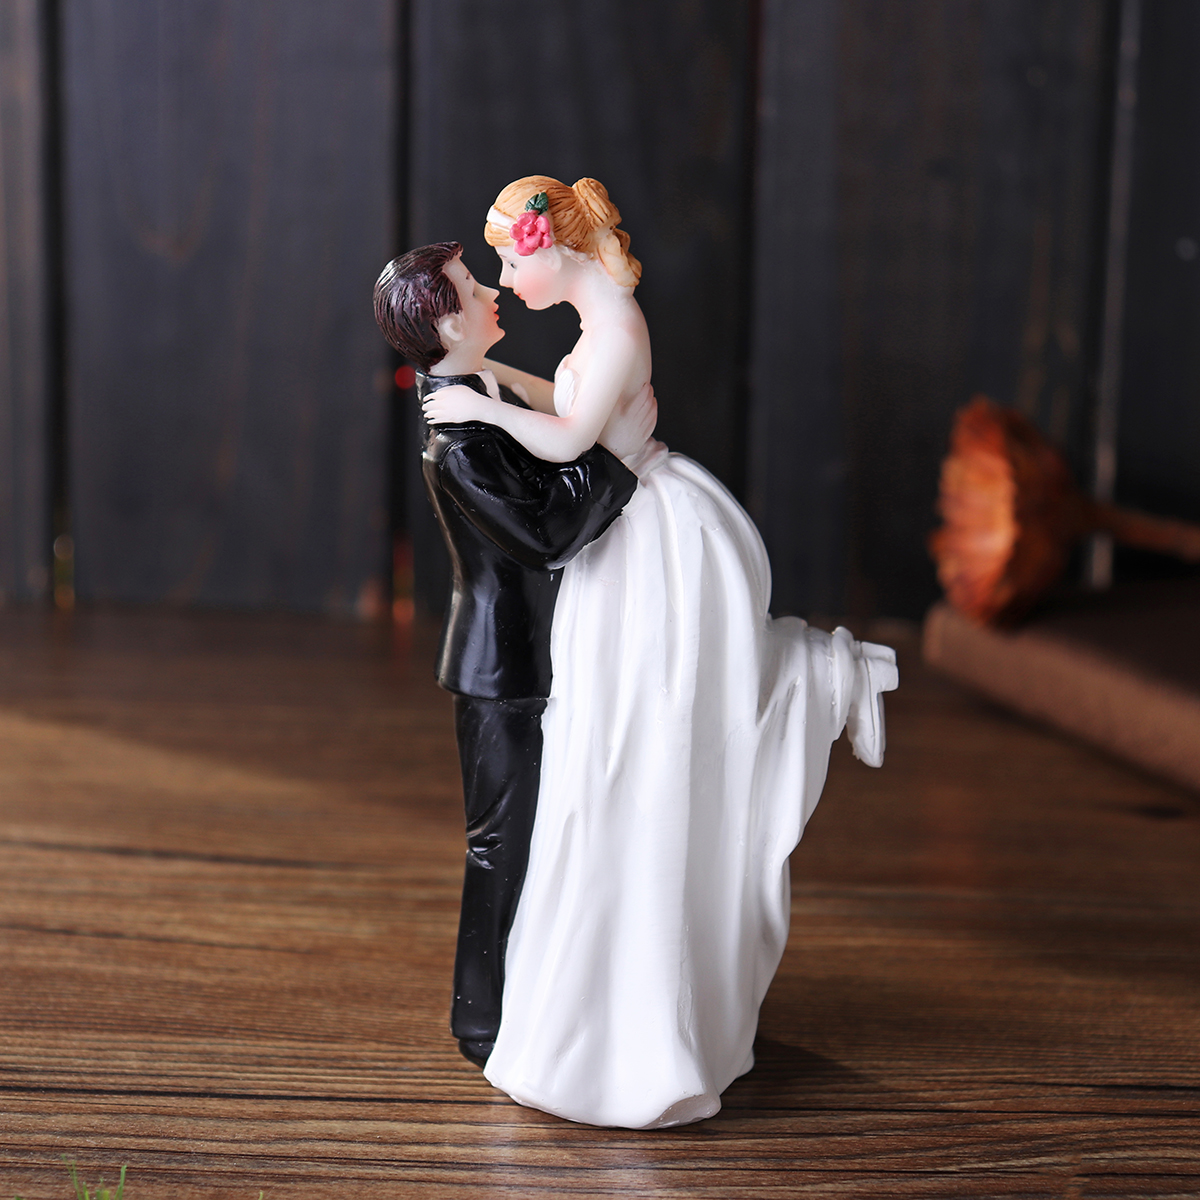 Romantic-Funny-Wedding-Cake-Topper-Figure-Bride-Groom-Couple-Bridal-Decorations-1421525-4